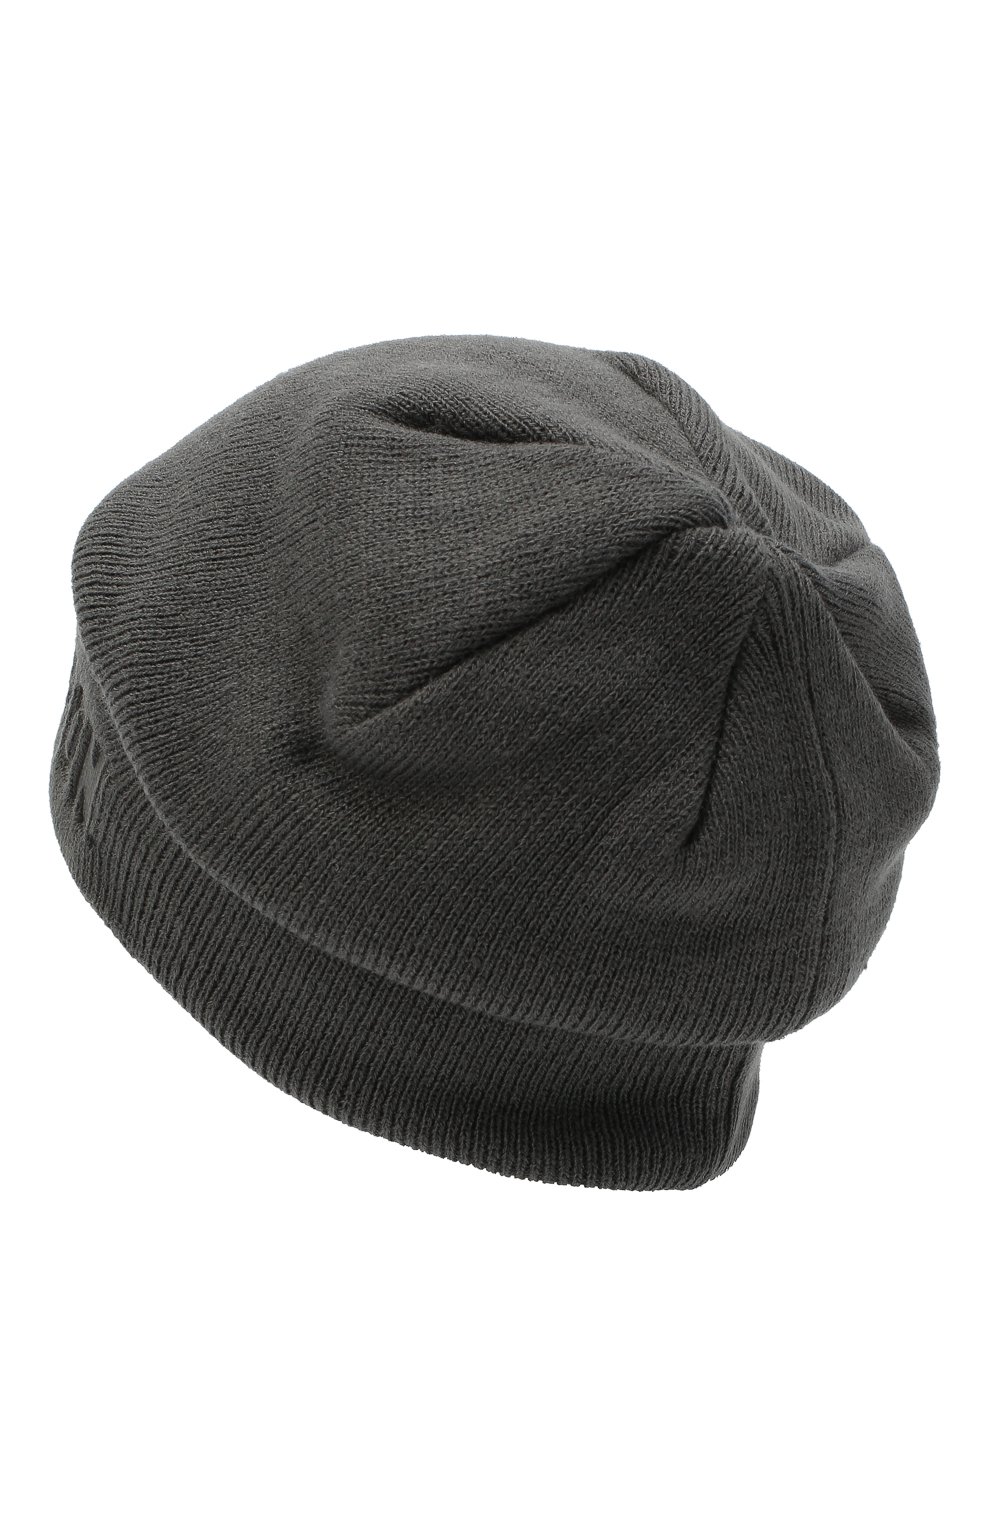 Мужская шапка general motorclothes HARLEY-DAVIDSON серого цвета, арт. 99430-18VM | Фото 2 (Материал: Текстиль, Синтетический материал; Кросс-КТ: Трикотаж)